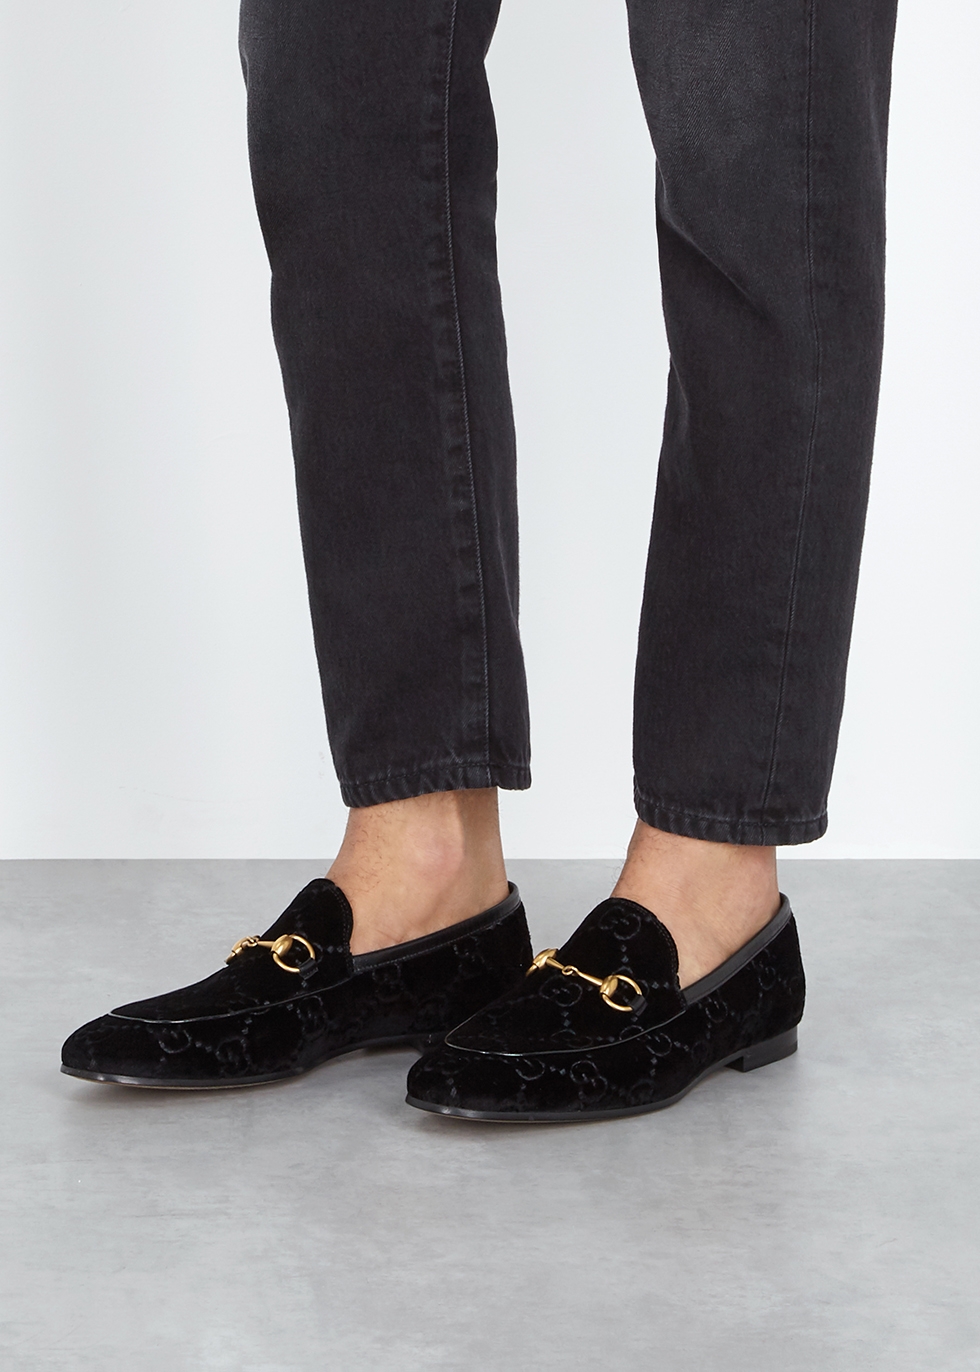 black velvet gucci loafers